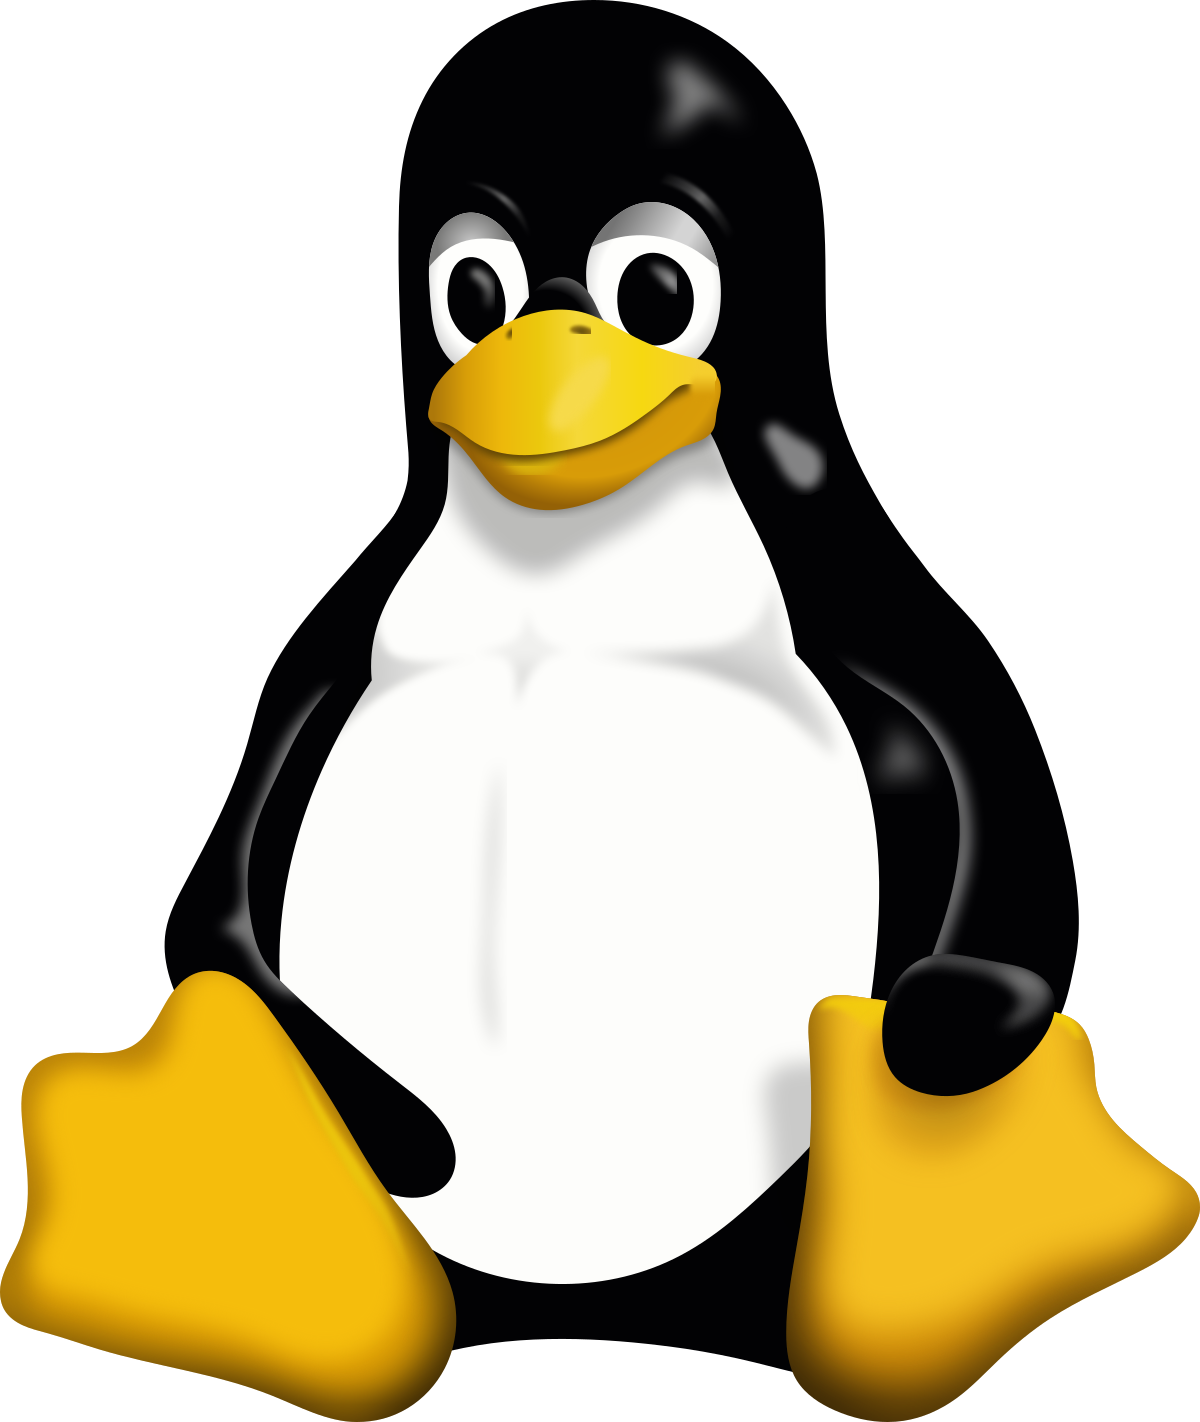 Embedded Linux Software Development